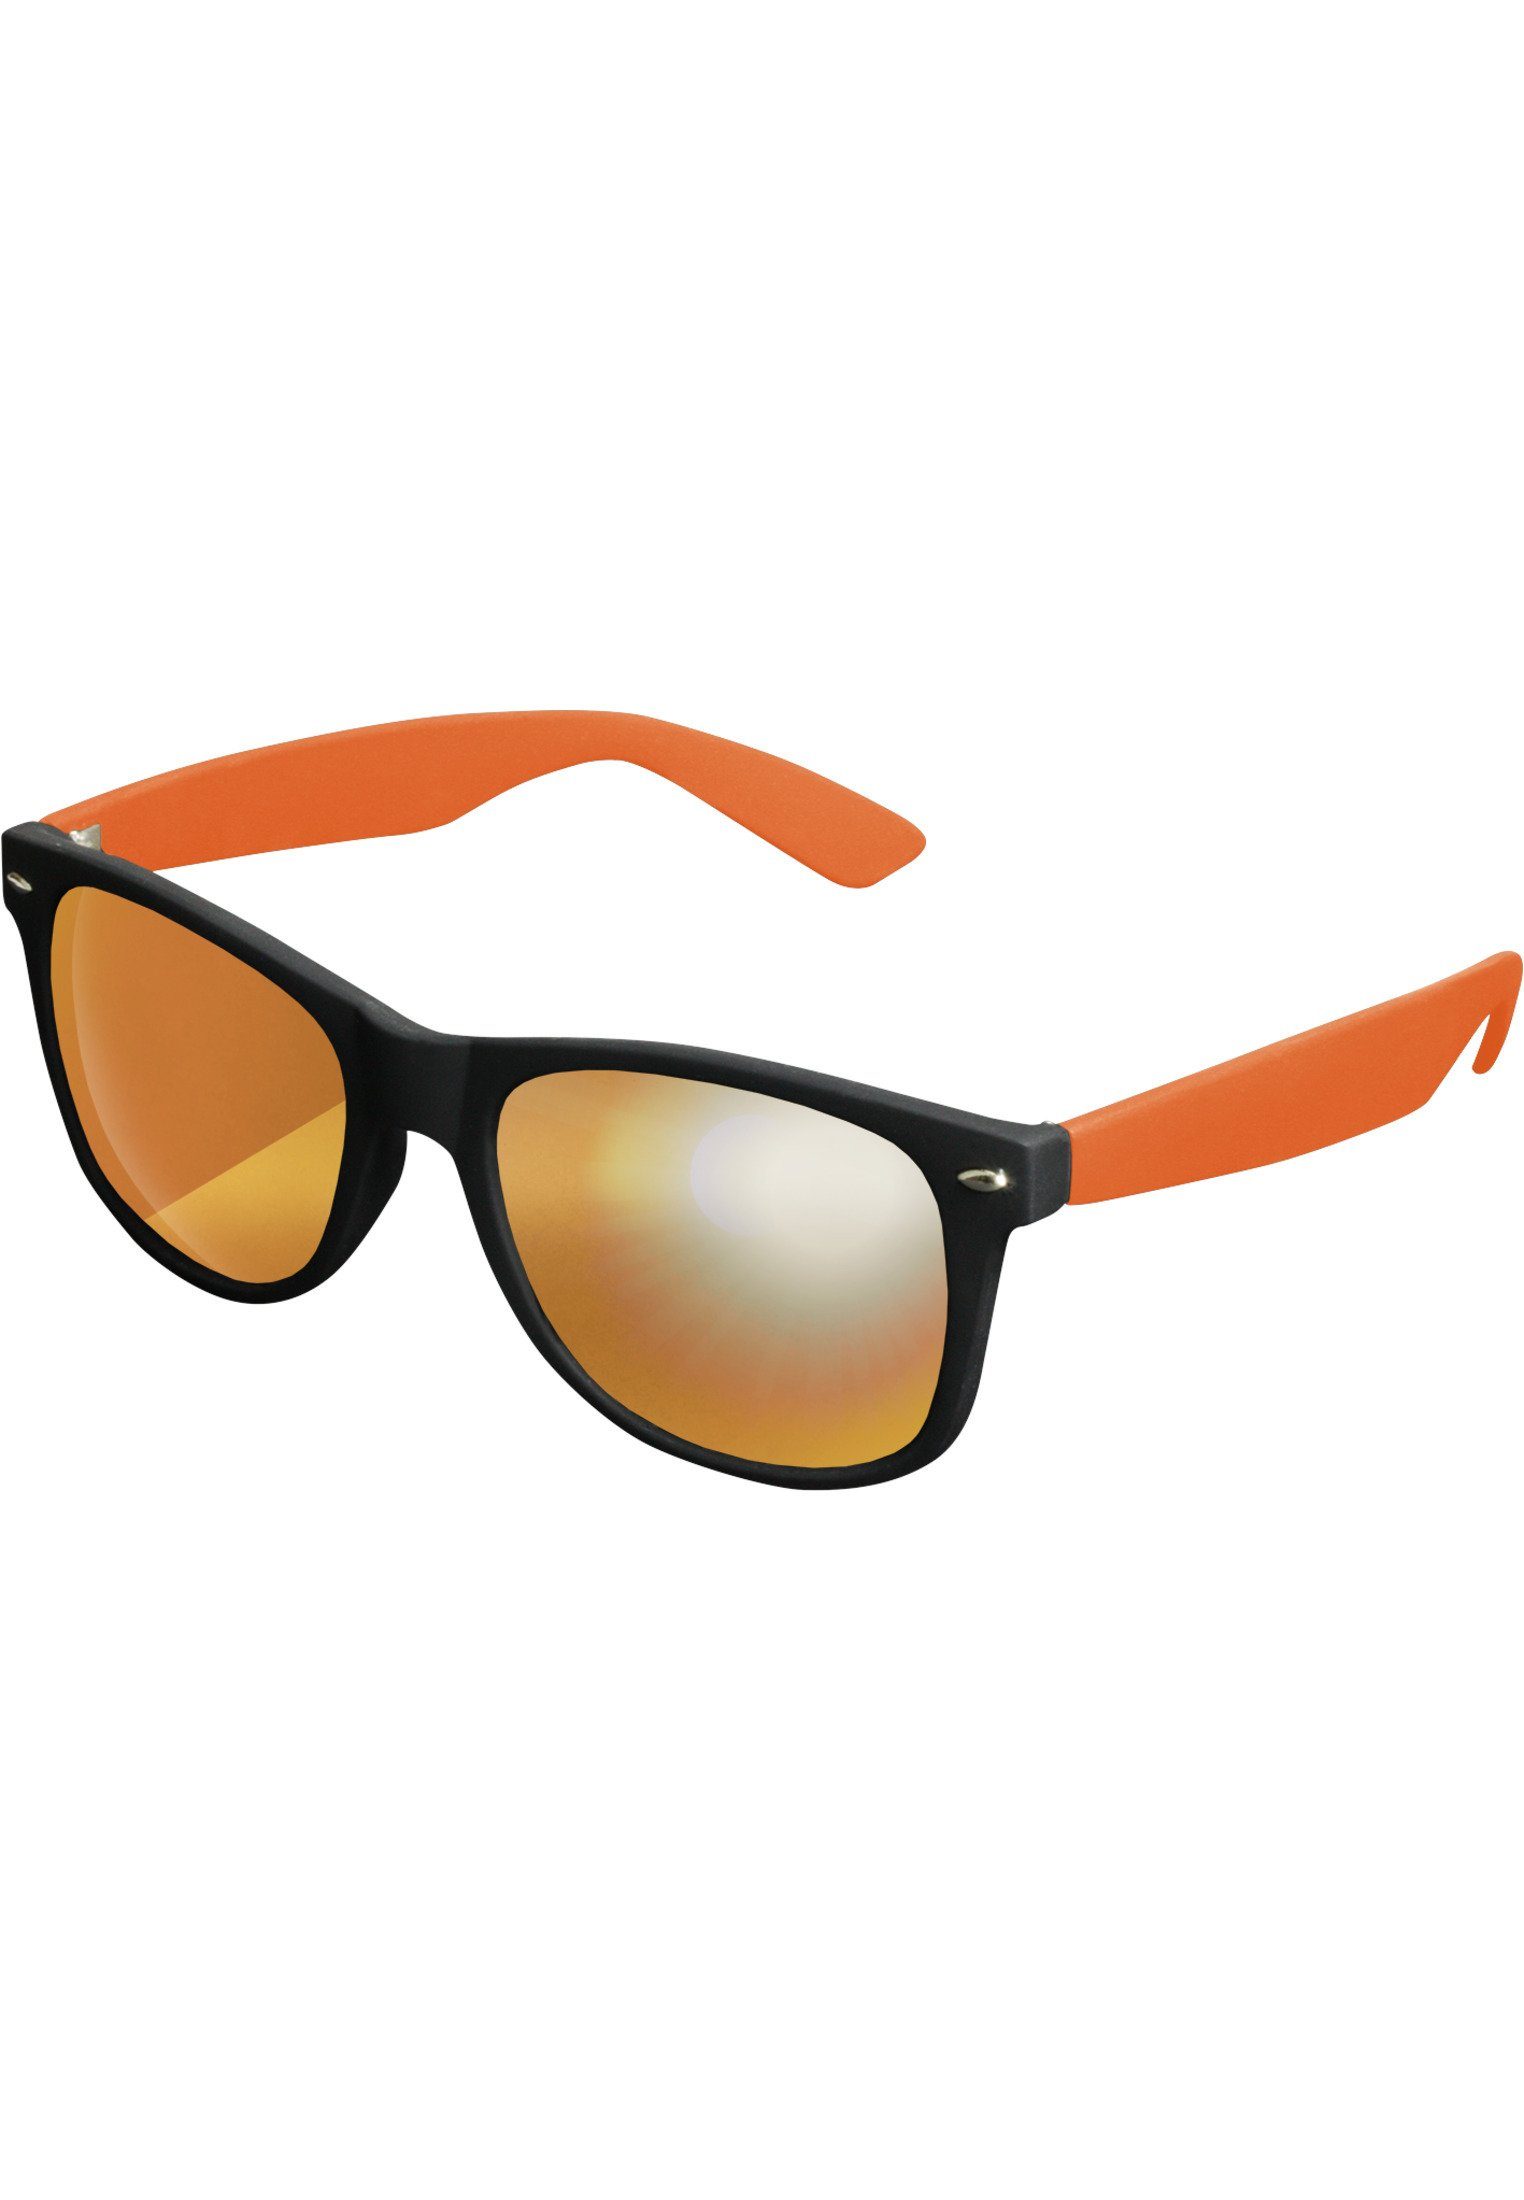 MSTRDS Likoma Sunglasses Mirror Sonnenbrille Accessoires blk/ora/ora